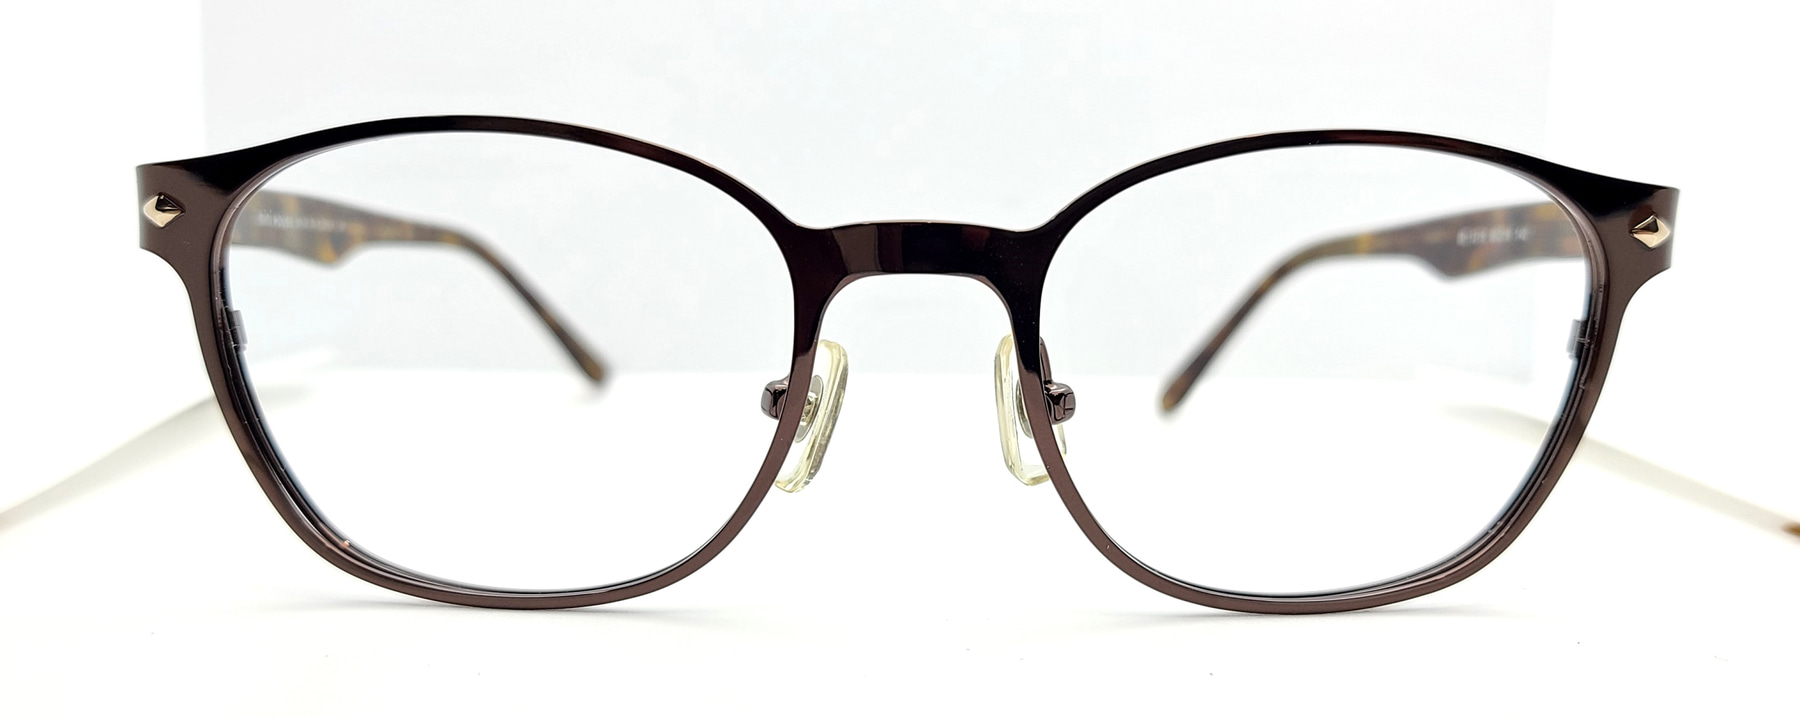 MINIHOUSE M-1215, Korean glasses, sunglasses, eyeglasses, glasses